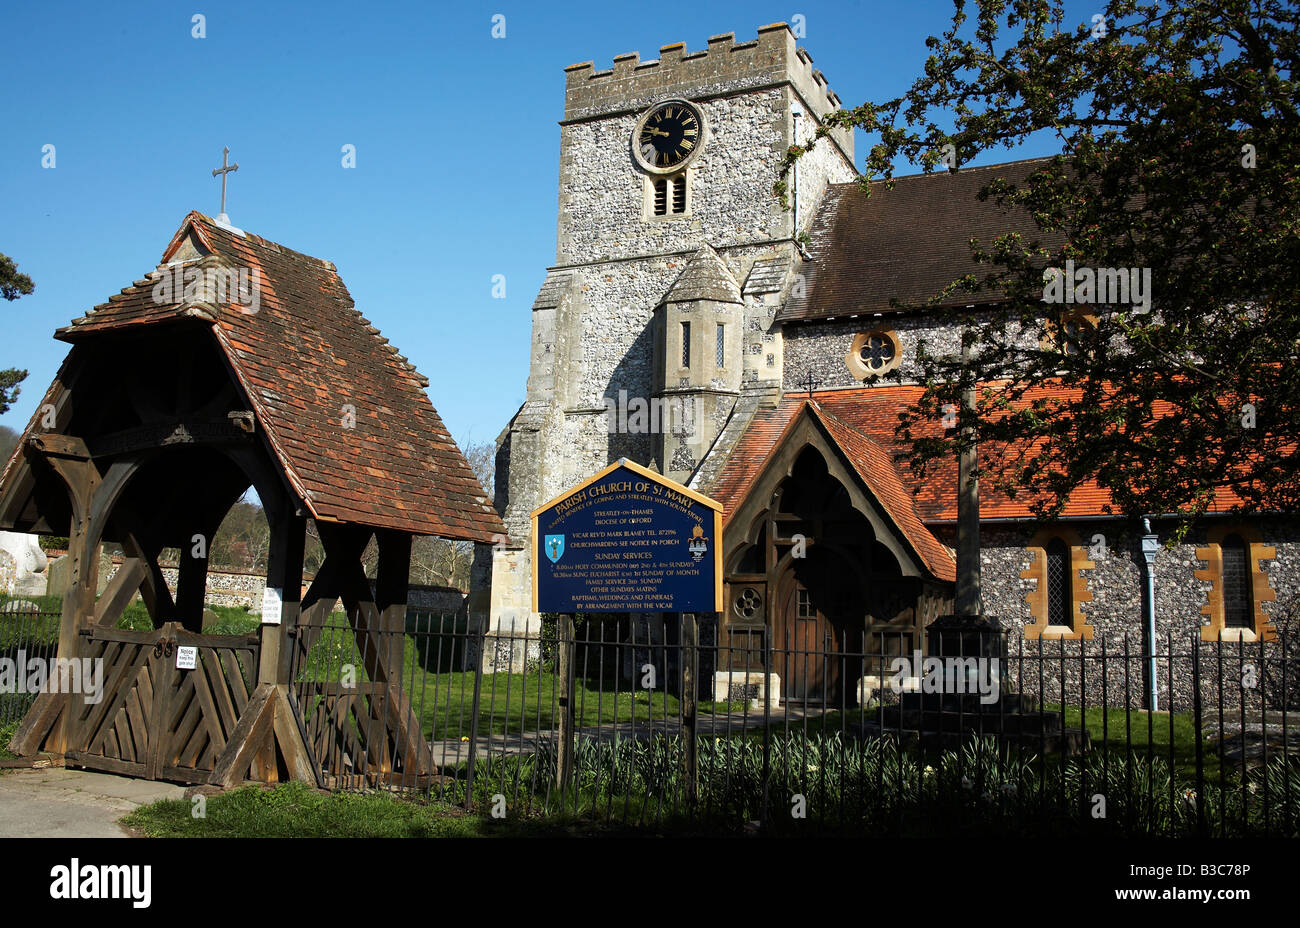 England, Berkshire, Streatley-on-Thames. St Mary's Parish Church in Streatley-on-Thames. Stock Photo